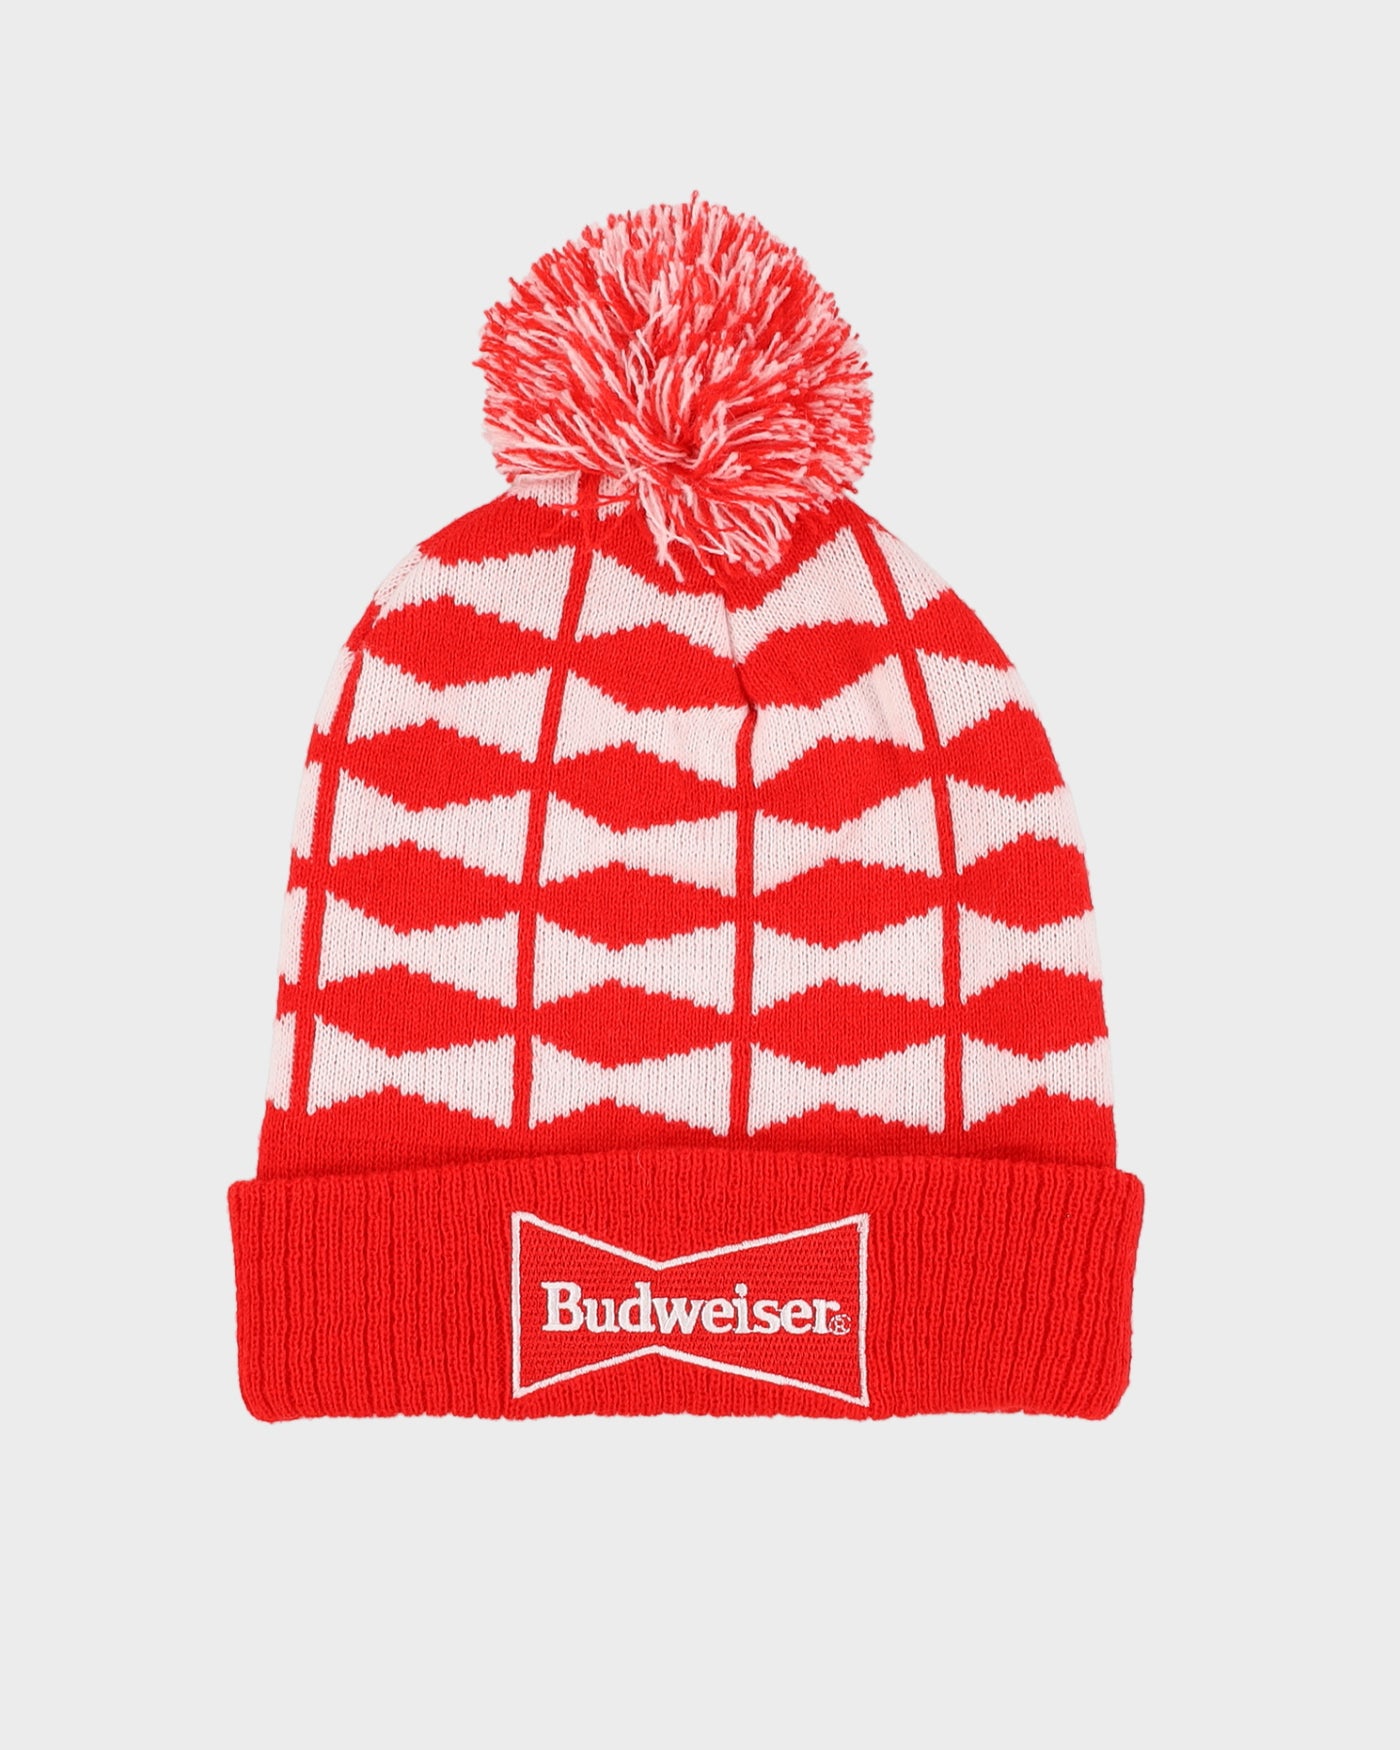 Budweiser Red Bobble Hat Beanie